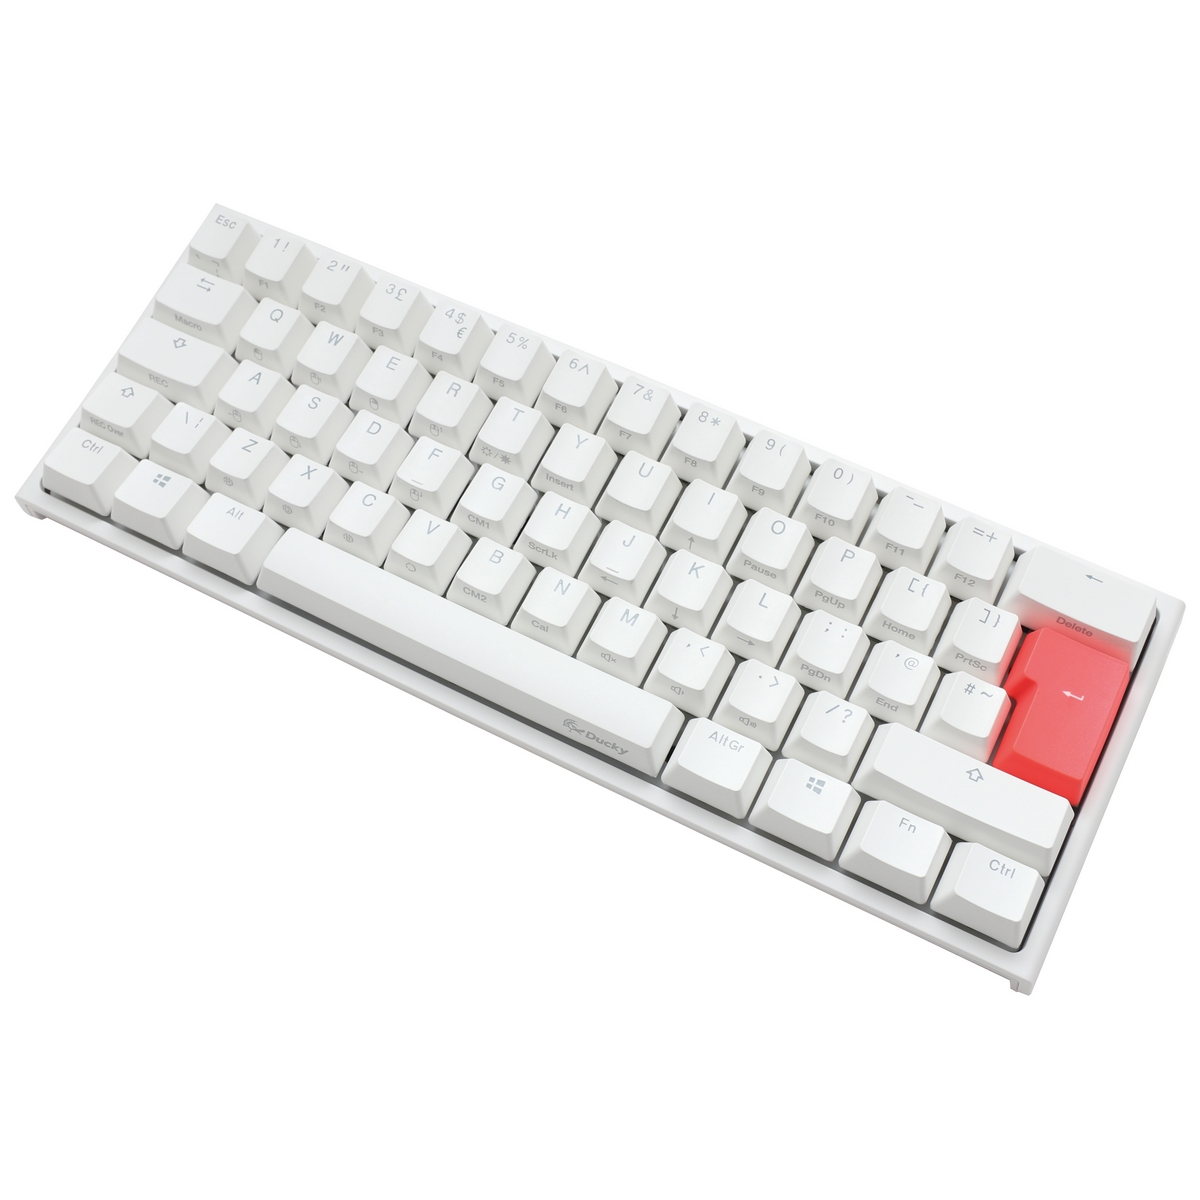 Ducky - Ducky One 2 Mini 60% White Frame RGB USB Mechanical Gaming Keyboard Black Cherry MX Switch UK Layout